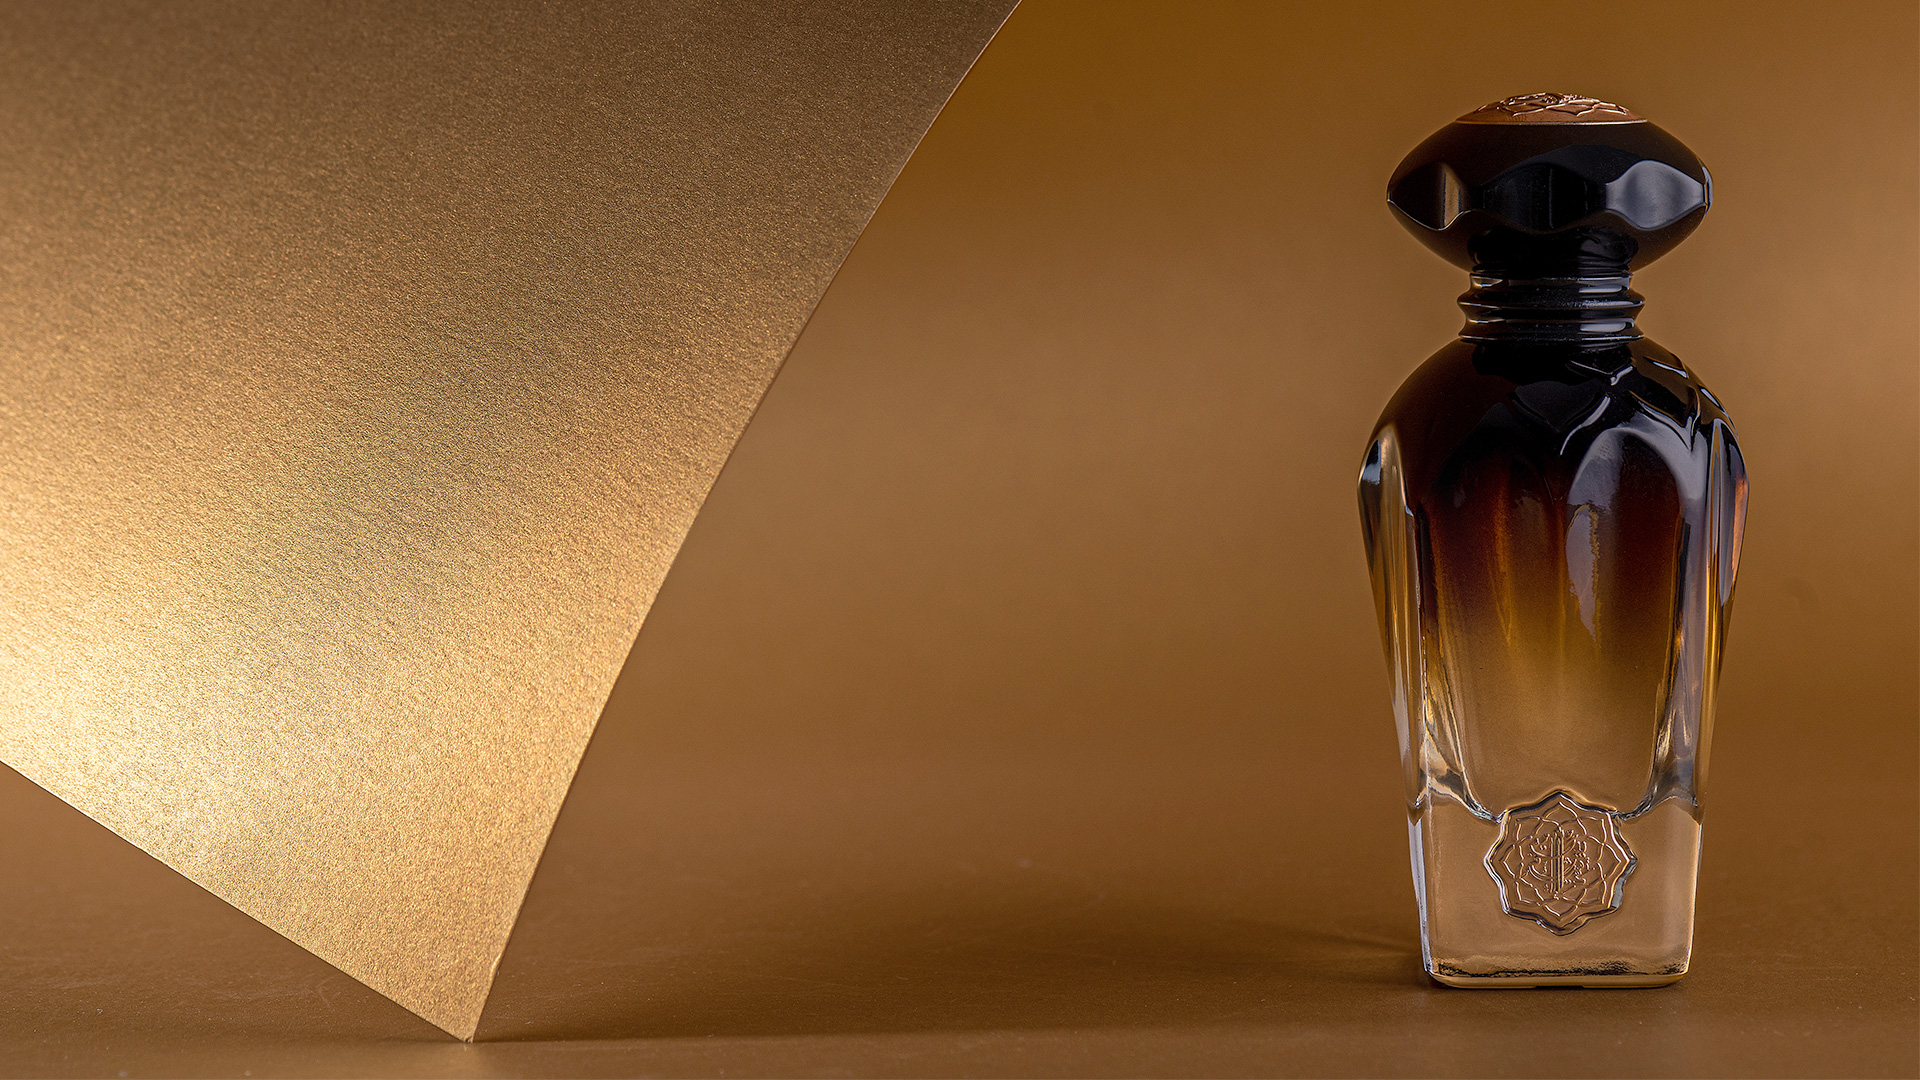 Discover Top Popular Perfume Brands for Men Online